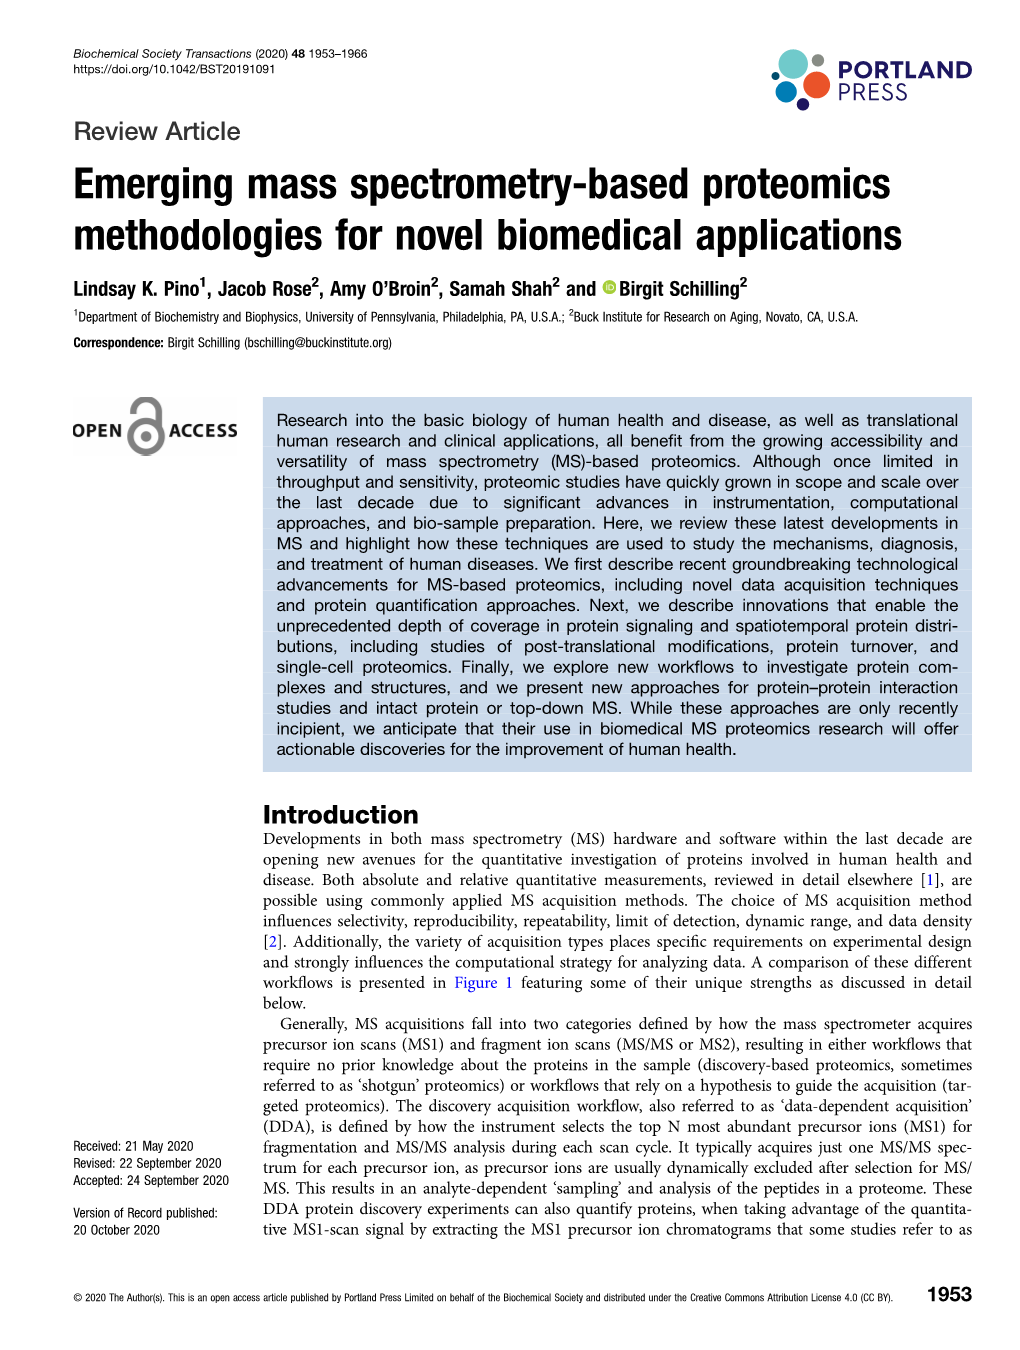 Emerging Mass Spectrometry-Based Proteomics Methodologies for Novel Biomedical Applications